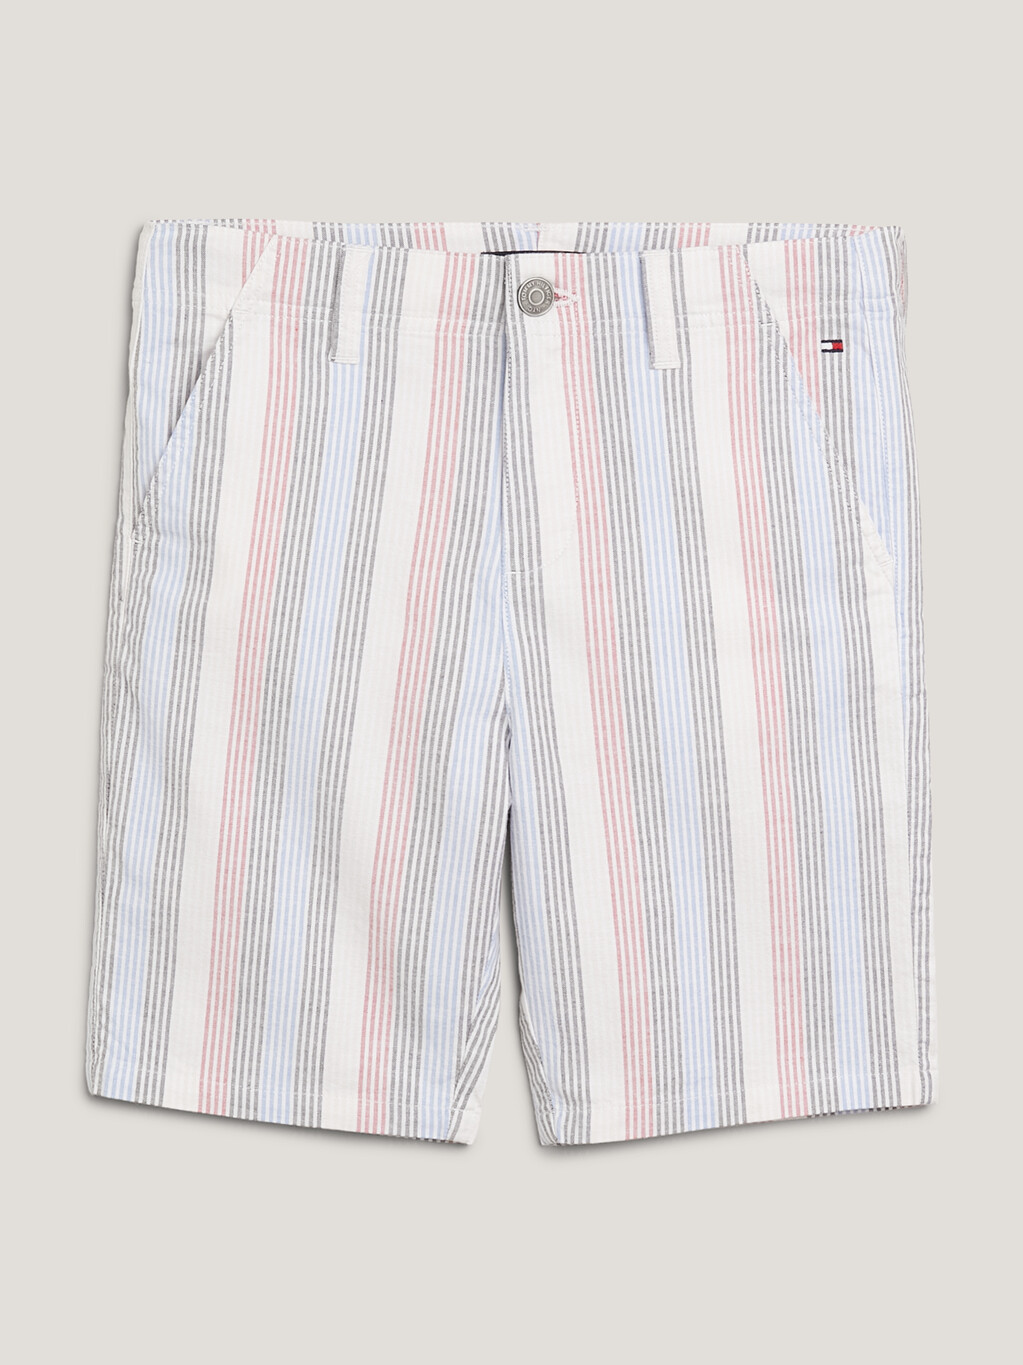 Oxford Stripe Straight Fit Chino Shorts, Calico/Rwb Stripe, hi-res